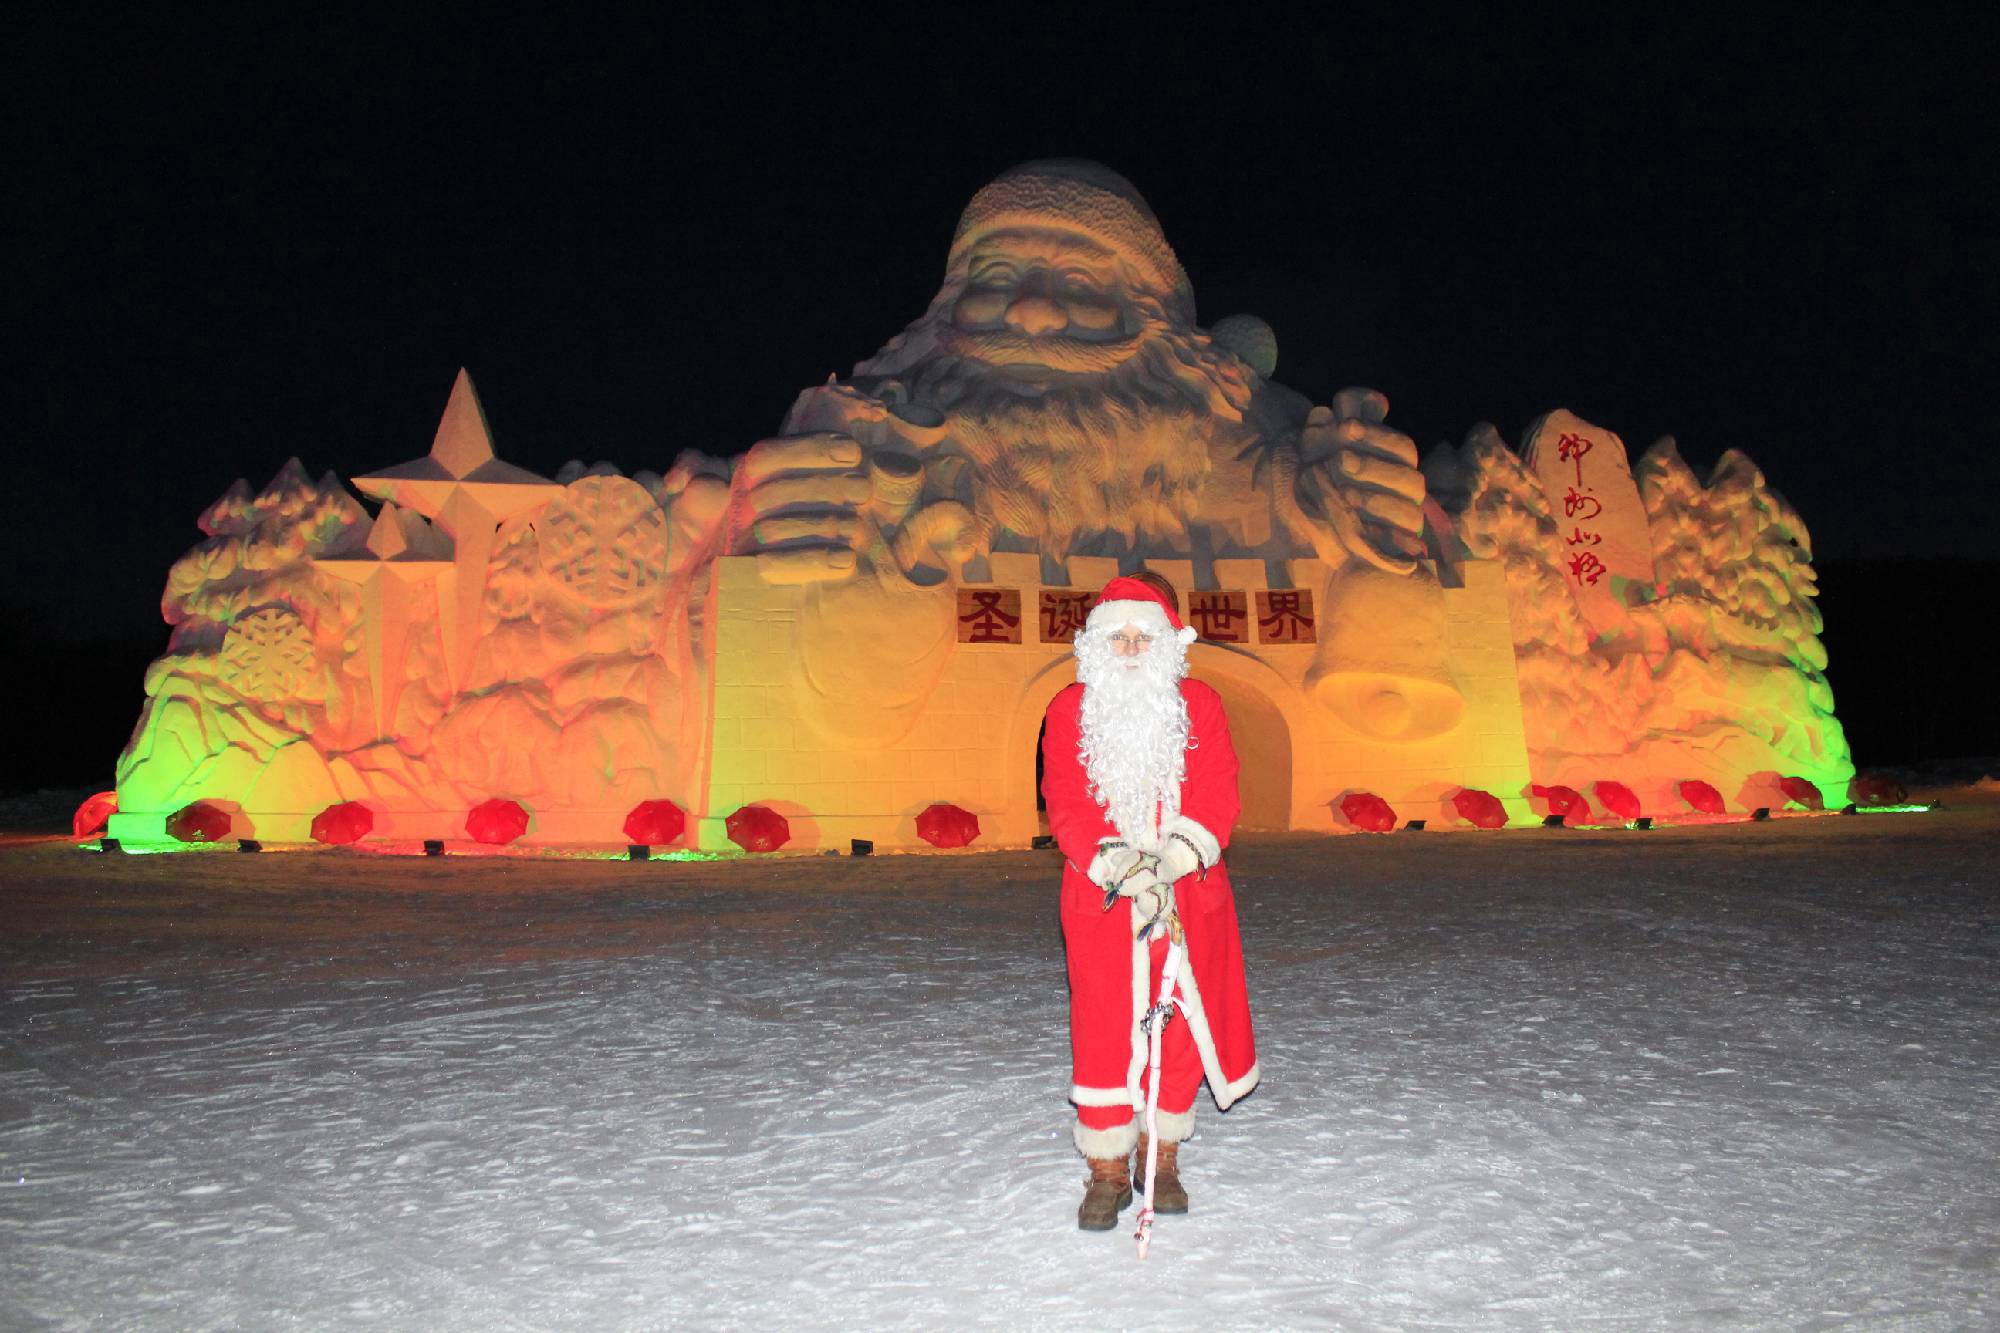 The 6th Finnish Santa Claus Pekka Pasi